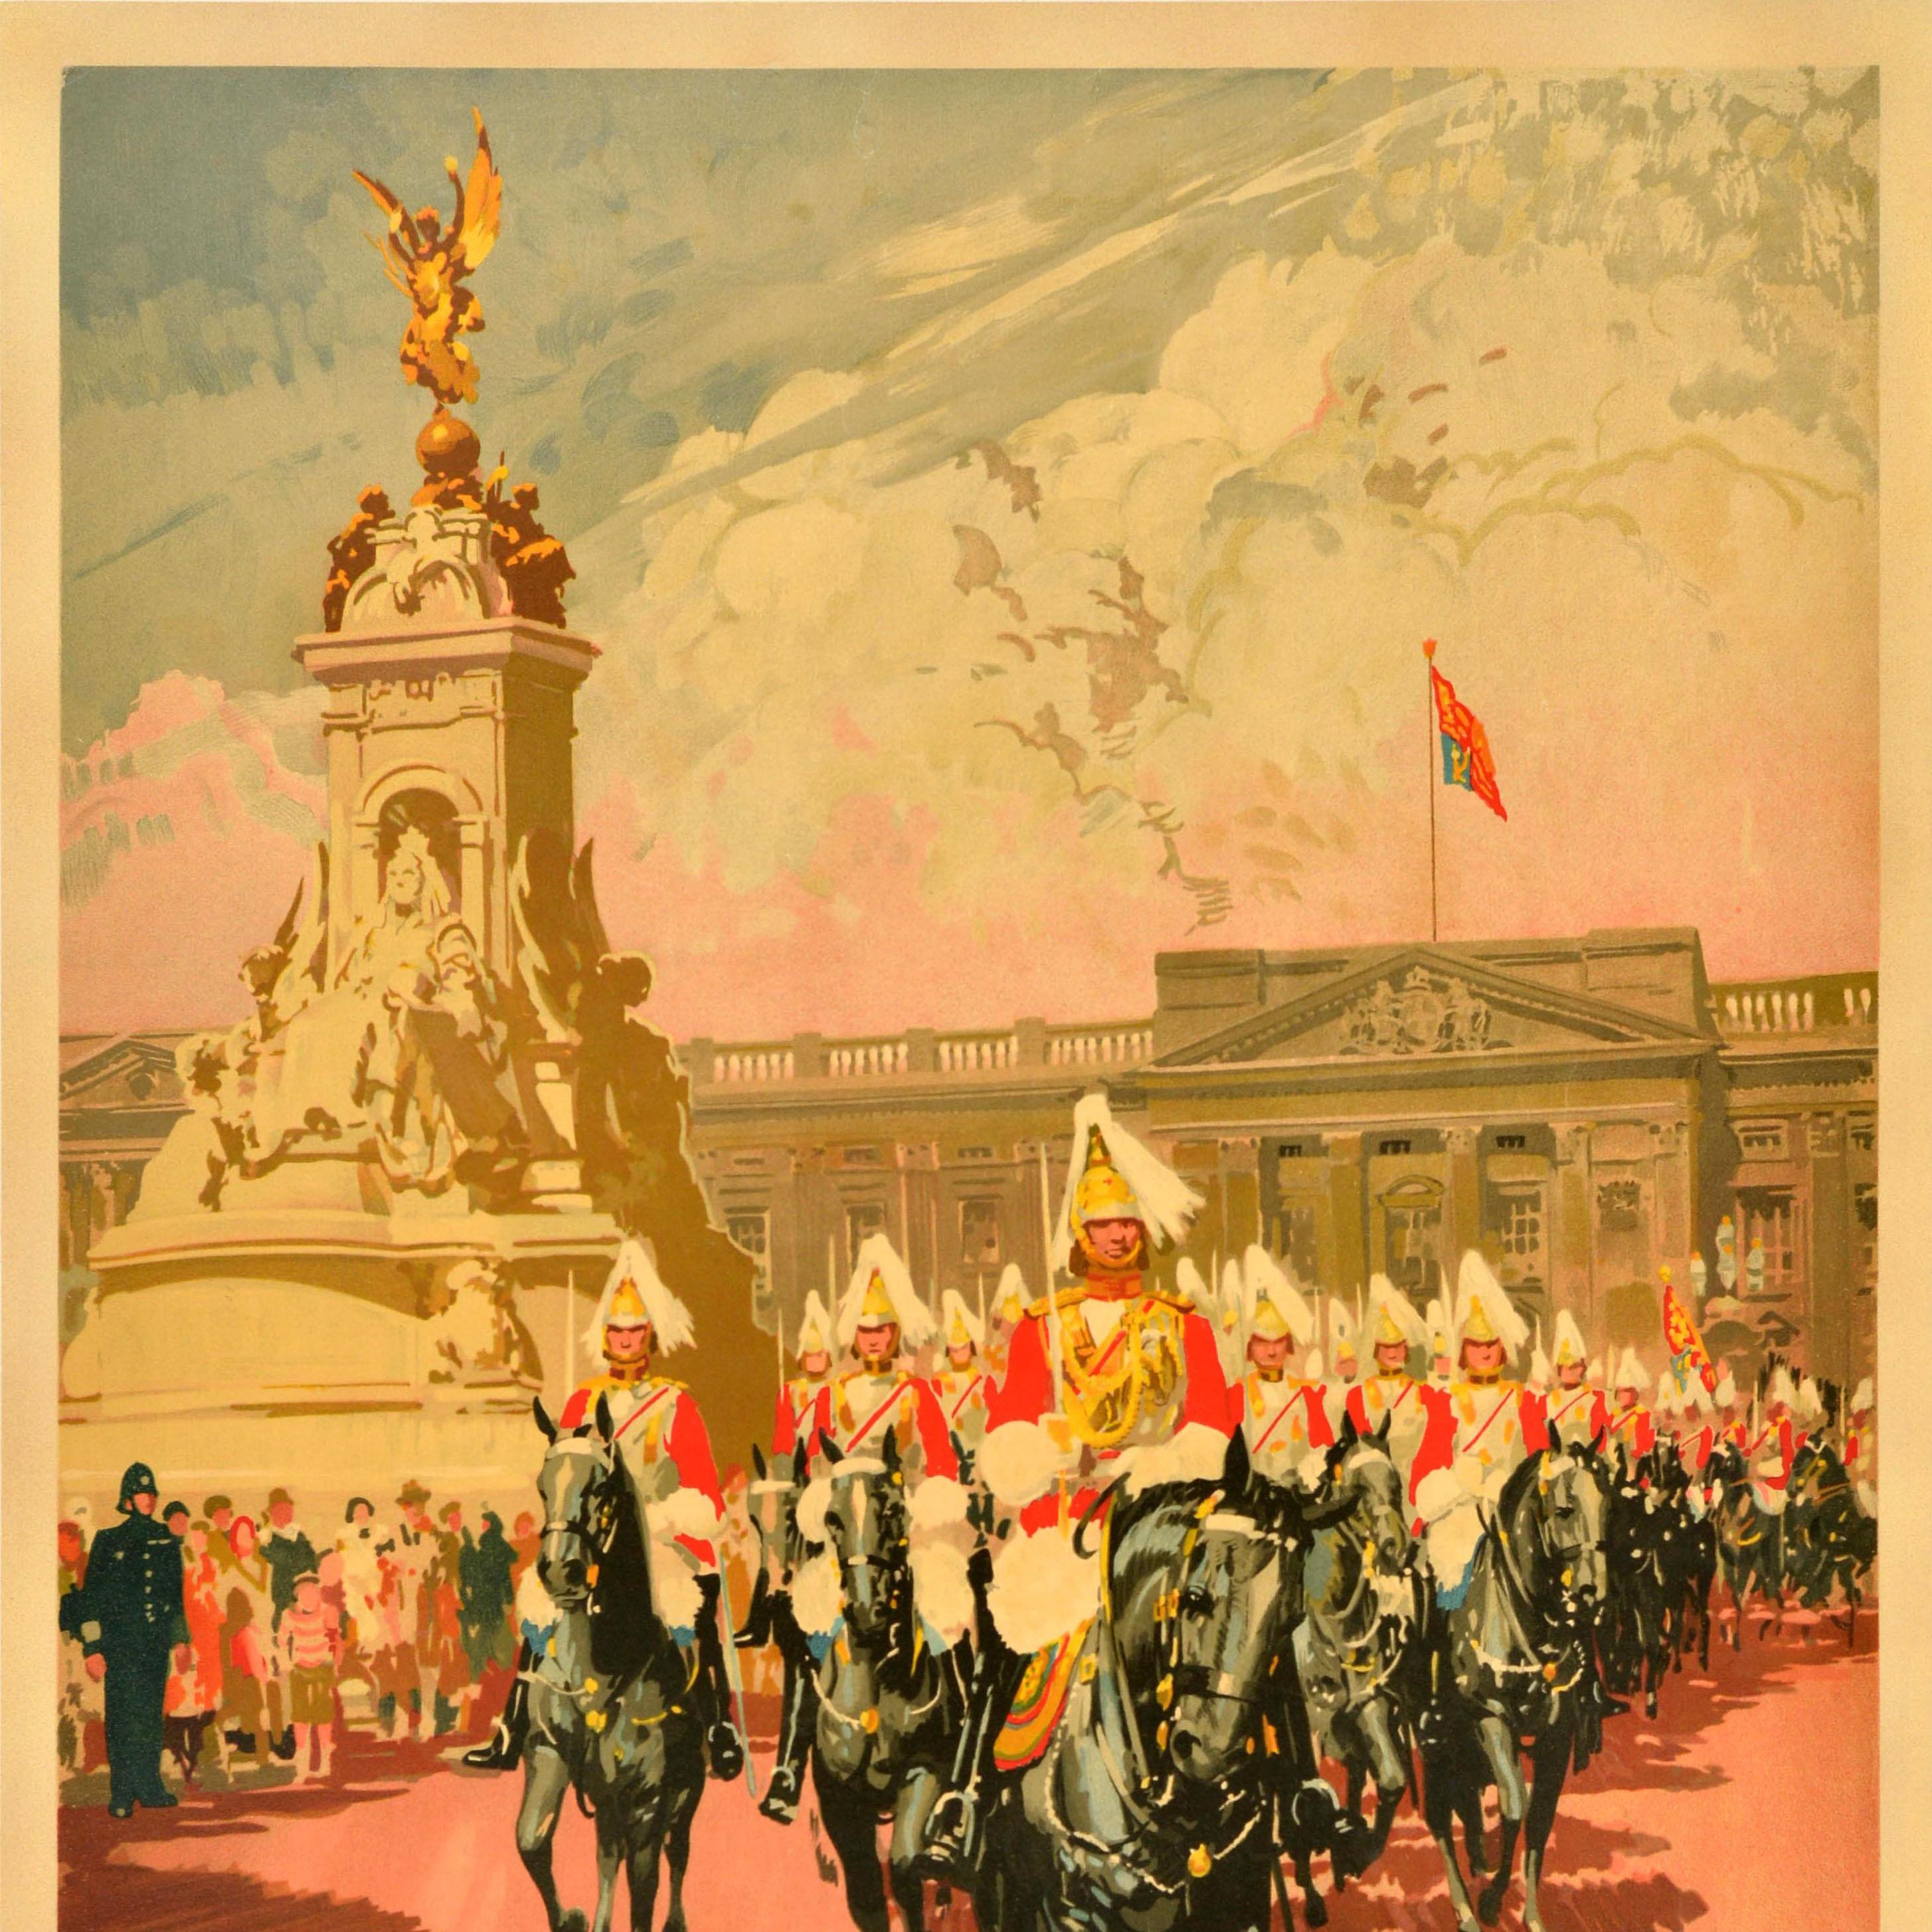 Original Vintage Travel Poster Visit London See Britain By Rail British Railways - Orange Print by Gordon Nicoll